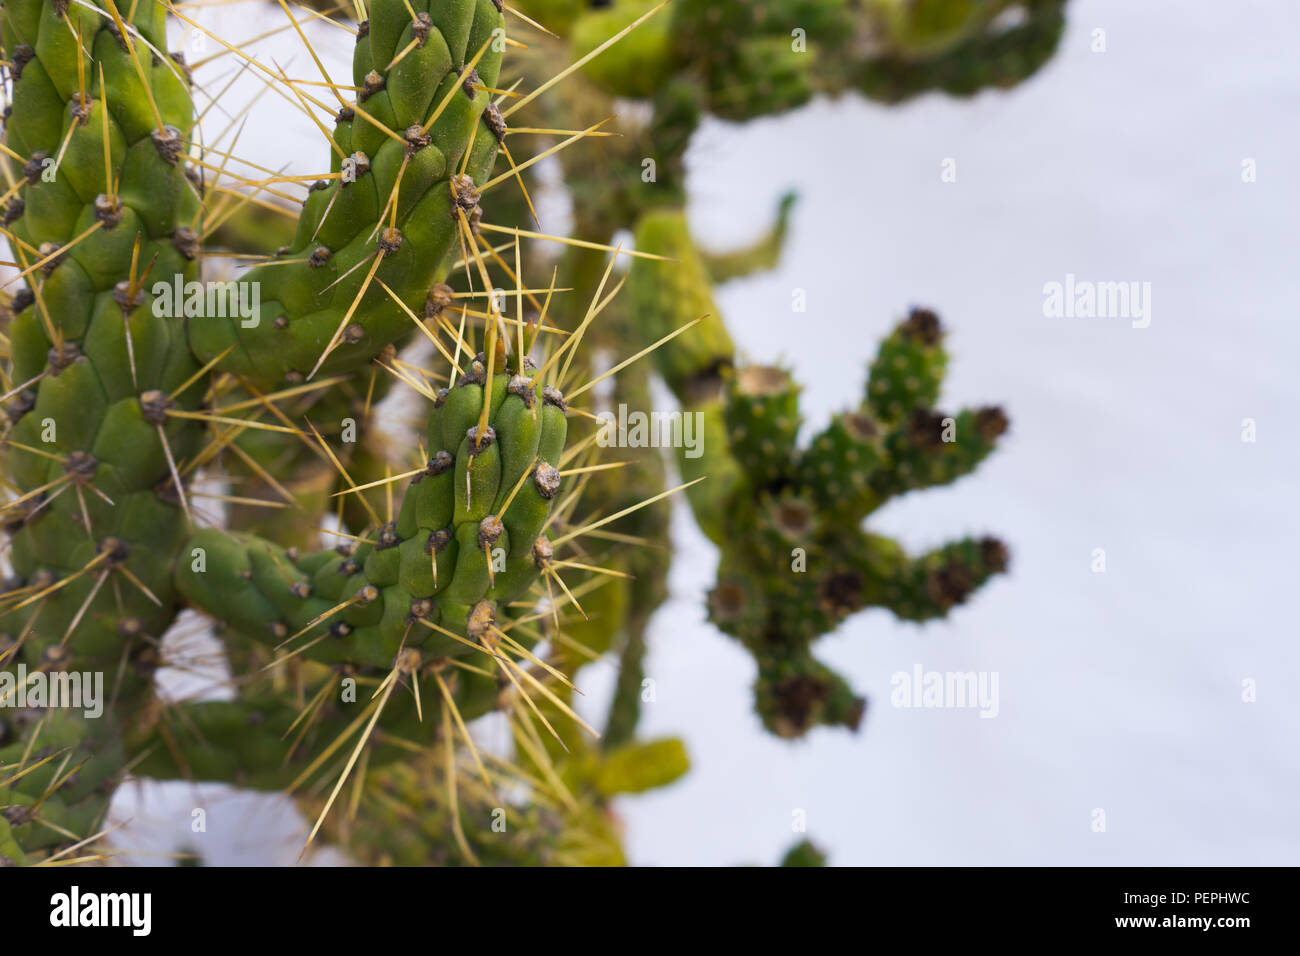 Prickly Pin Cactus on white background Stock Photo